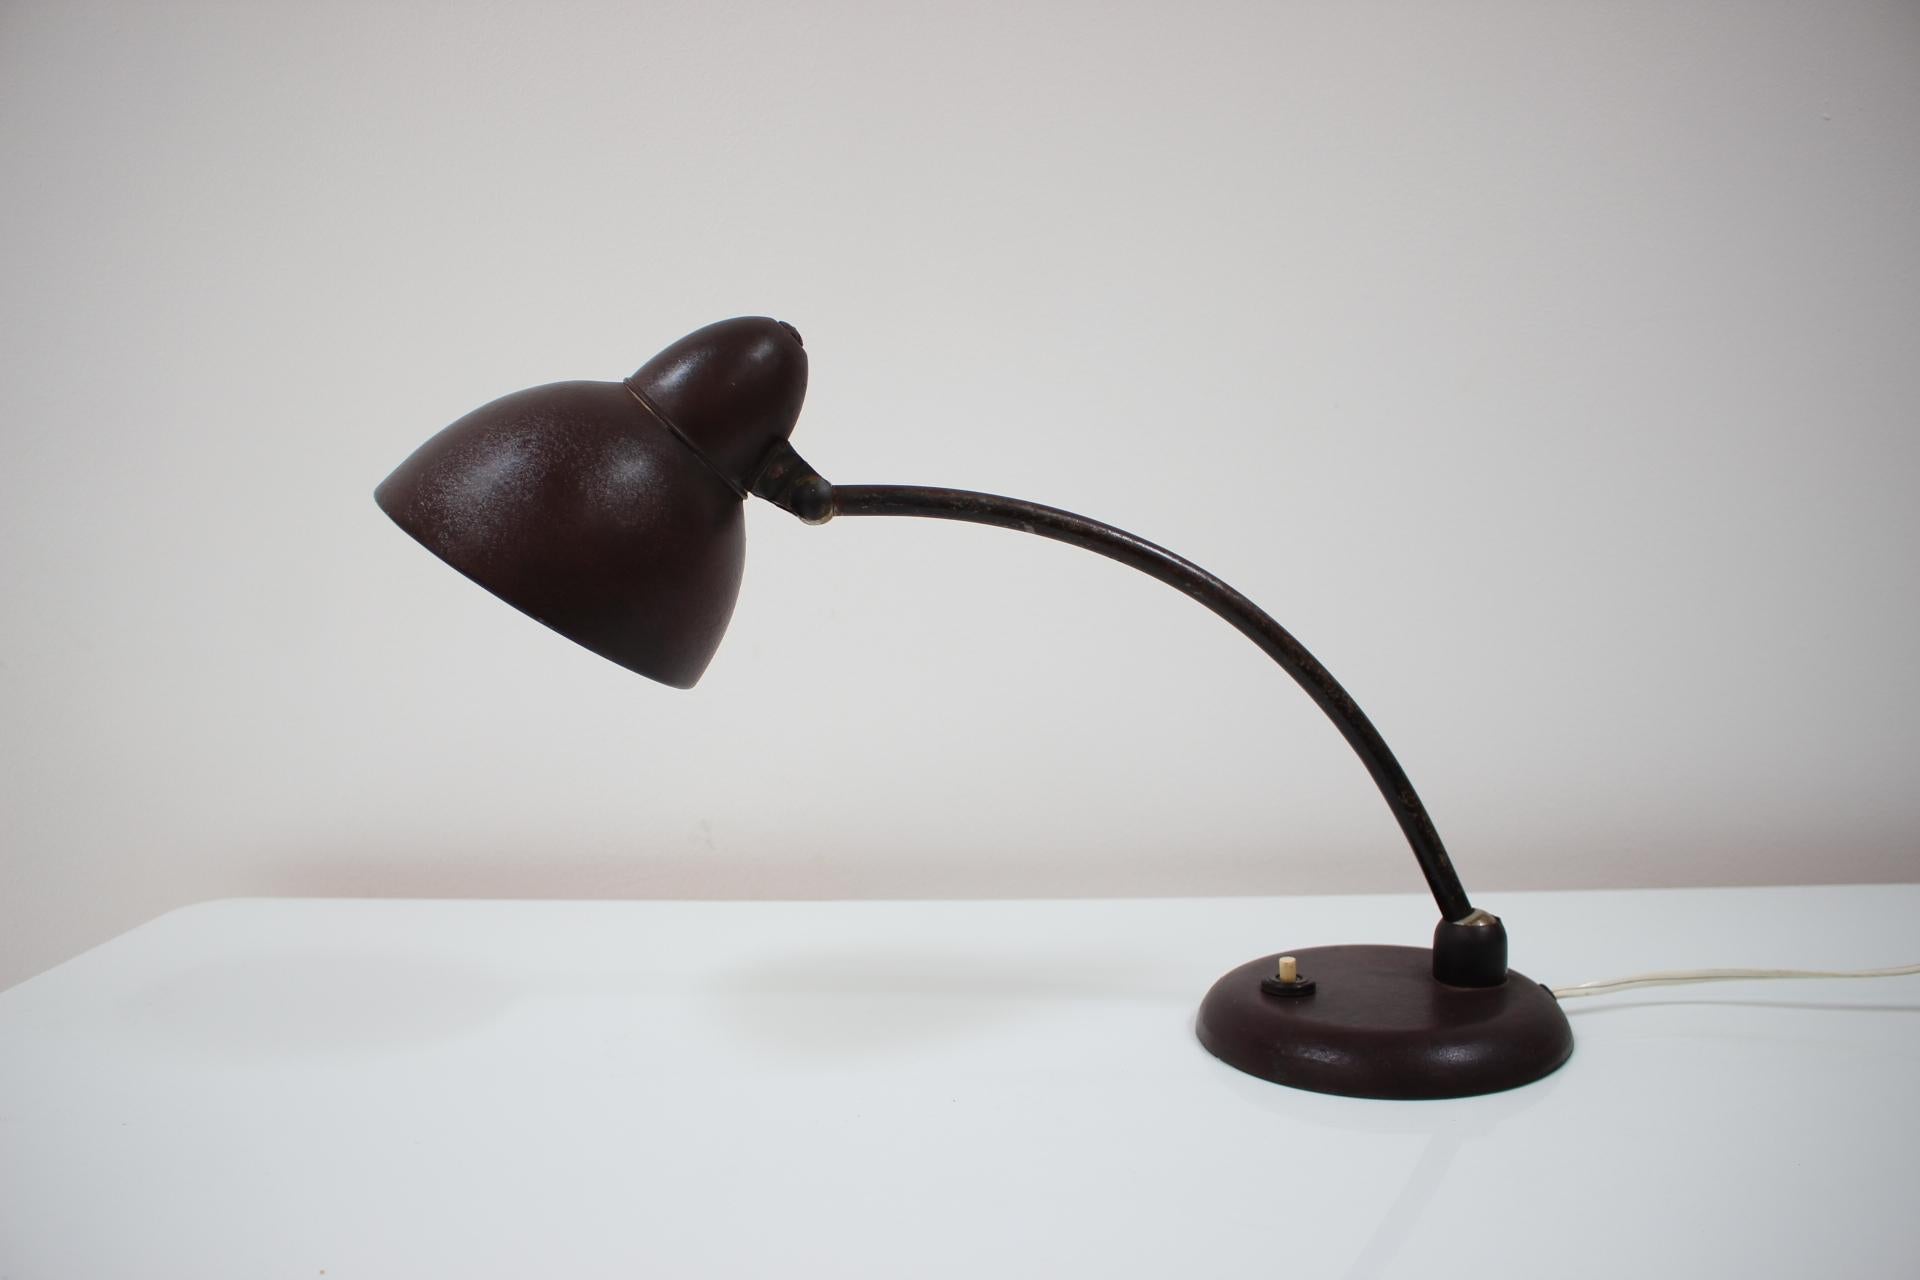 Czech Art-Deco Table Lamp Designed by František Anýž 1930's For Sale